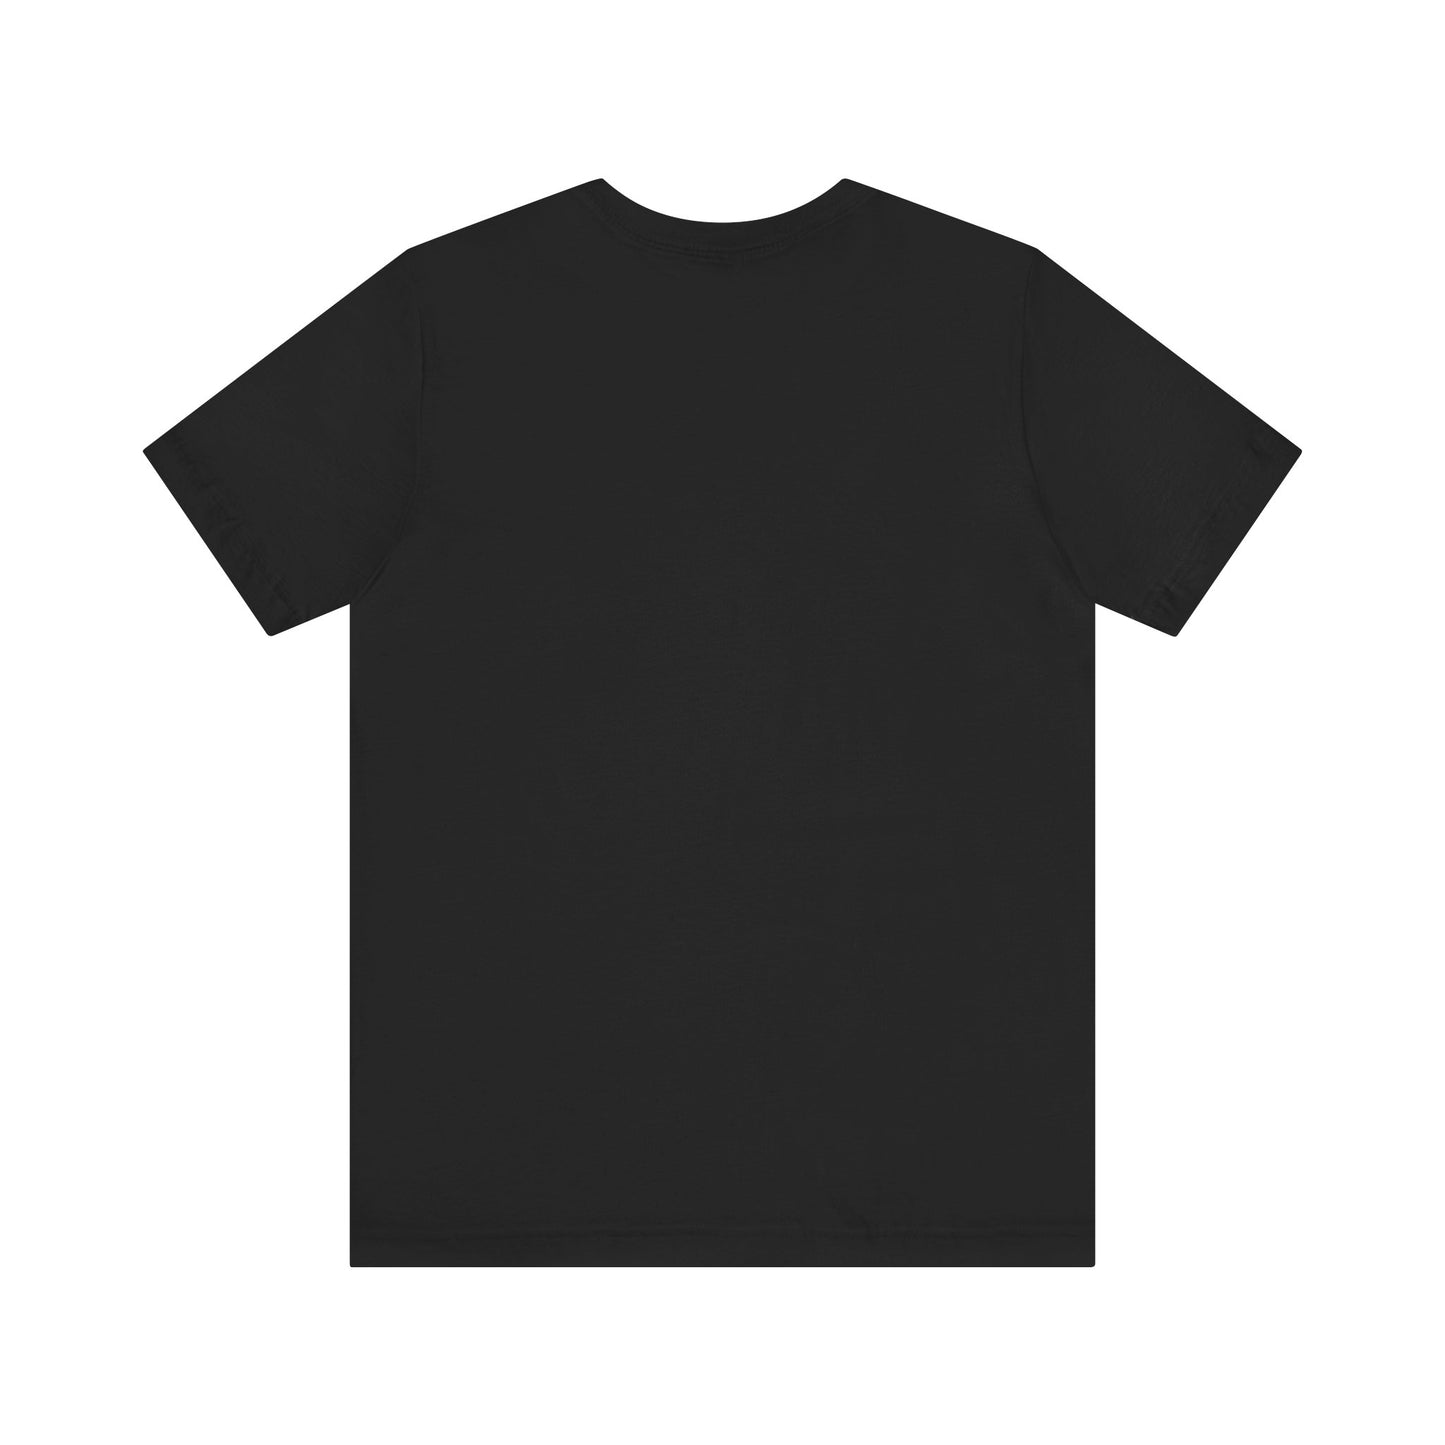 Chernihiv T-shirt Unisex Jersey Short Sleeve Tee